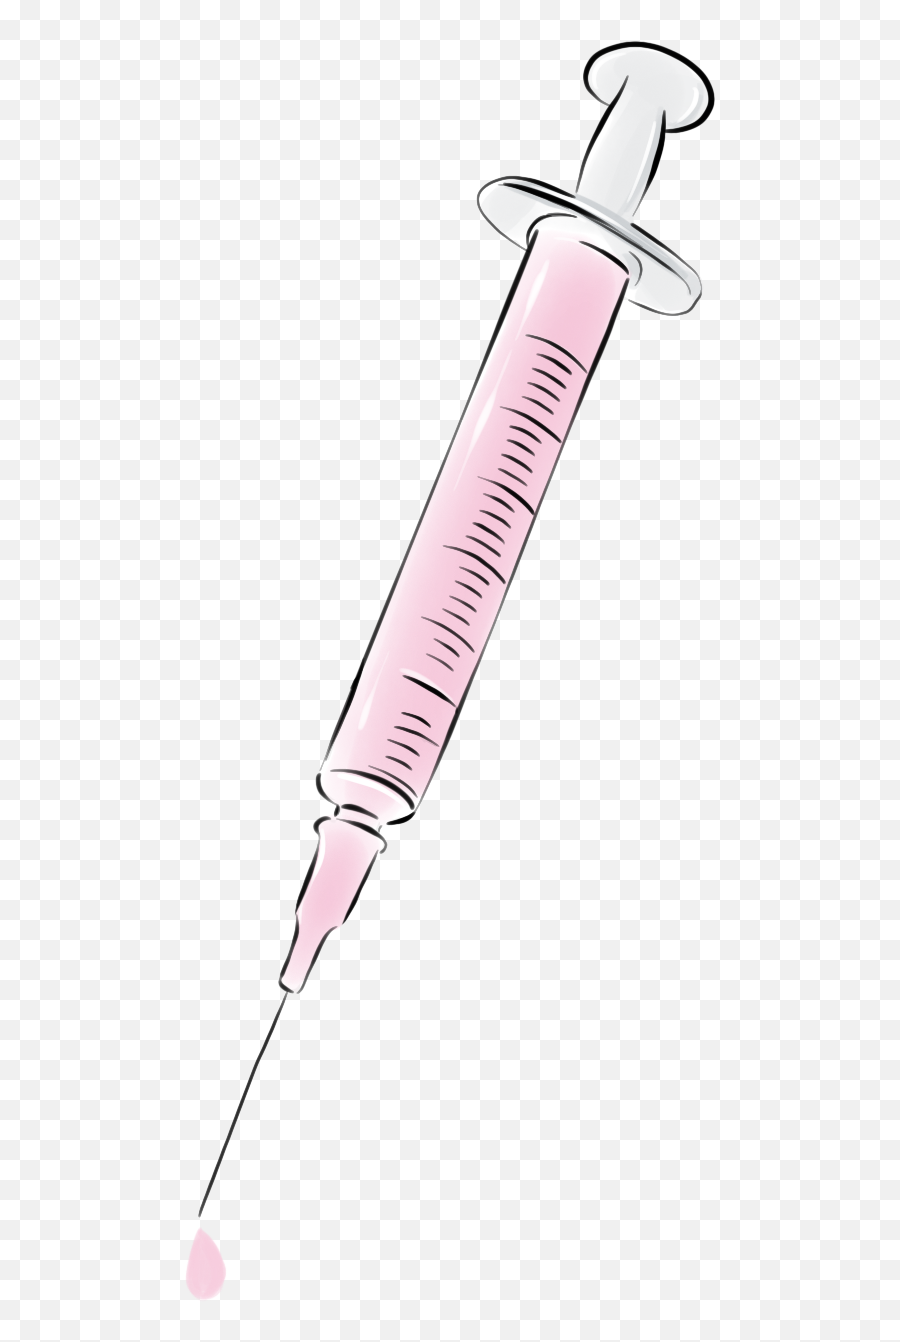 The Most Edited Syringe Picsart - Hypodermic Needle Emoji,Syringe Emoji Png